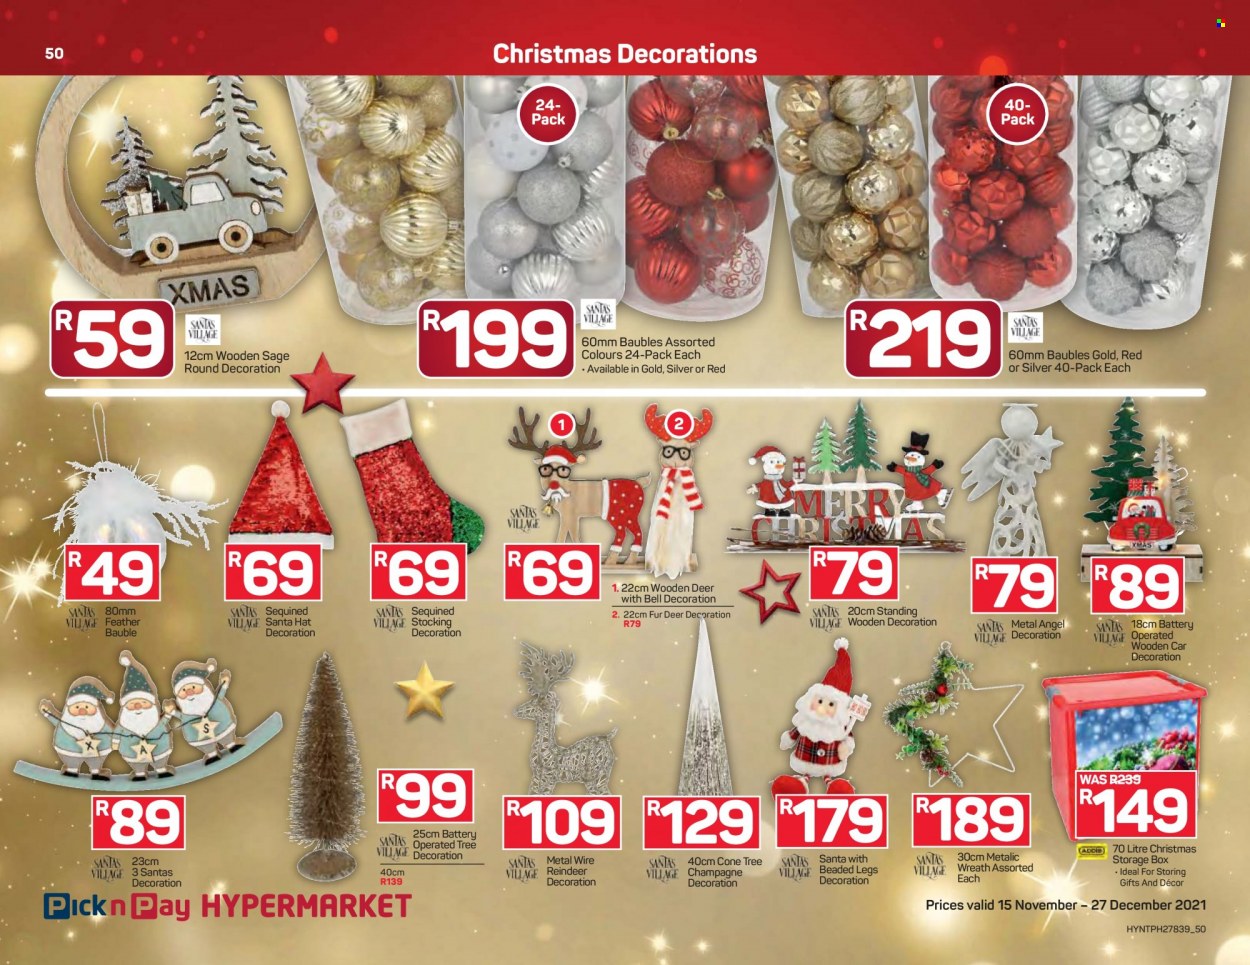 Pick n Pay Hypermarket specials - 11.15.2021 - 12.27.2021. 